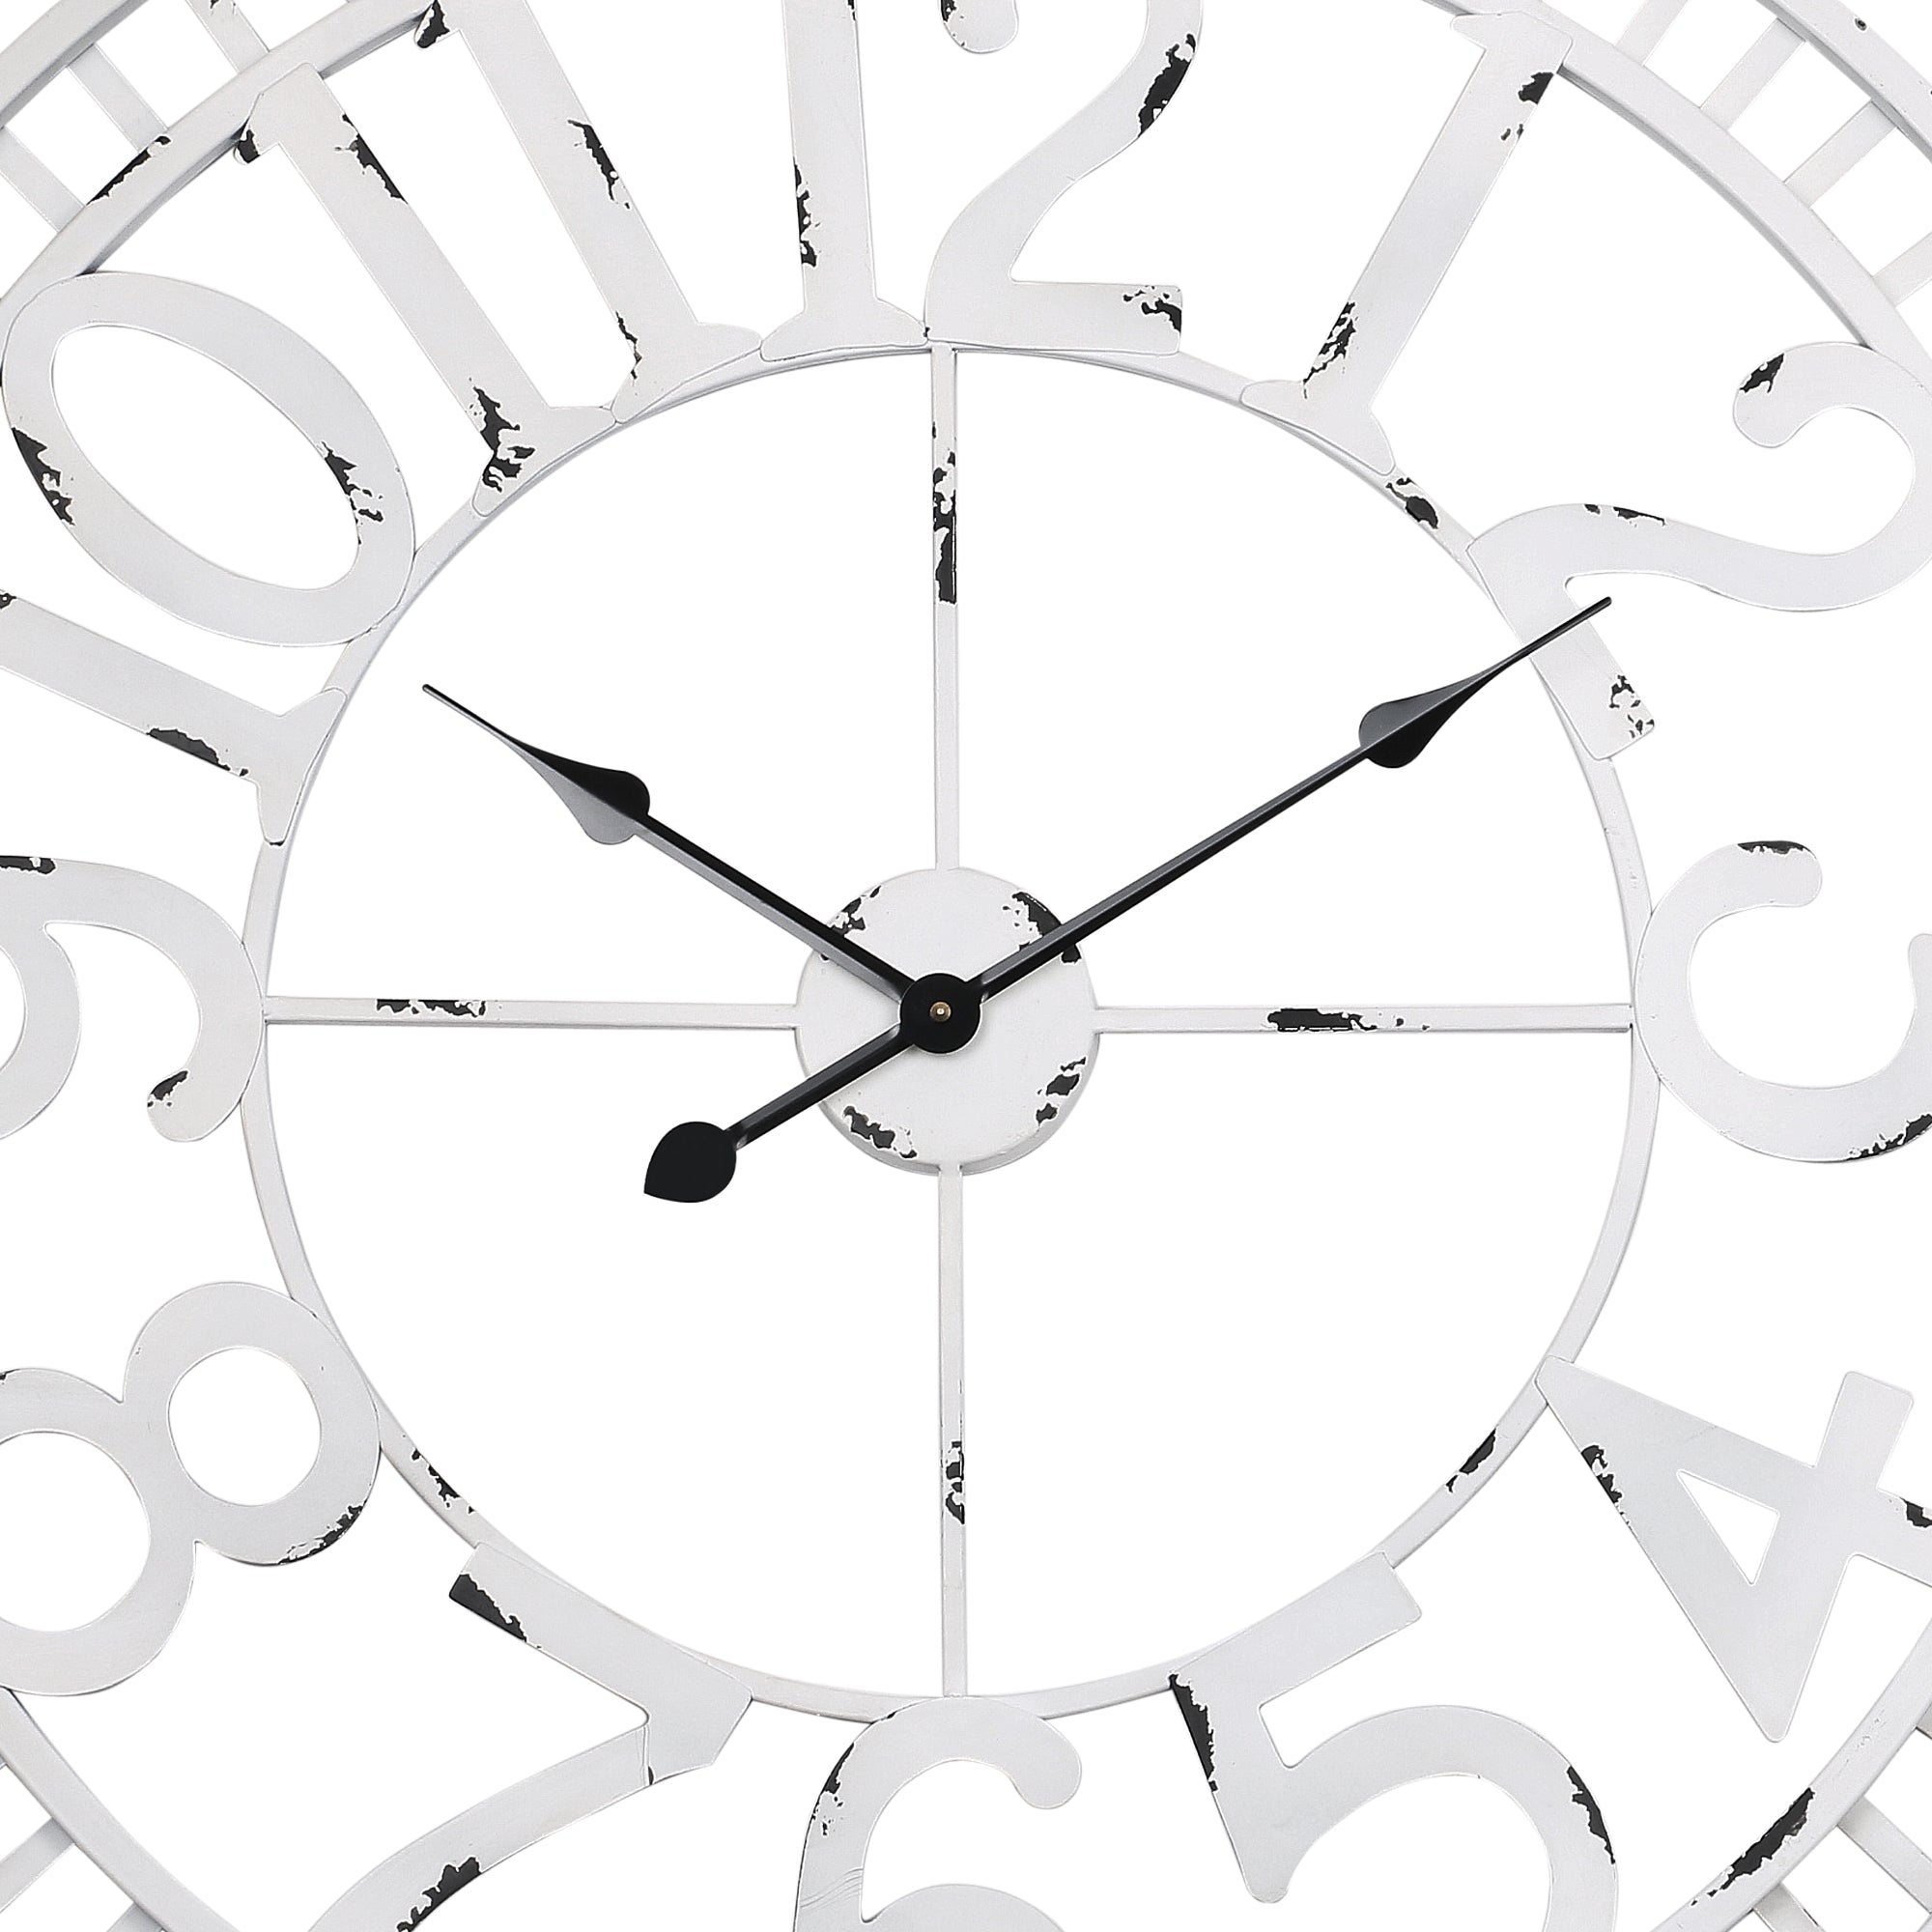 Loft97 CL23WW Manhattan Industrial Wall Clock, Analog, White, 32